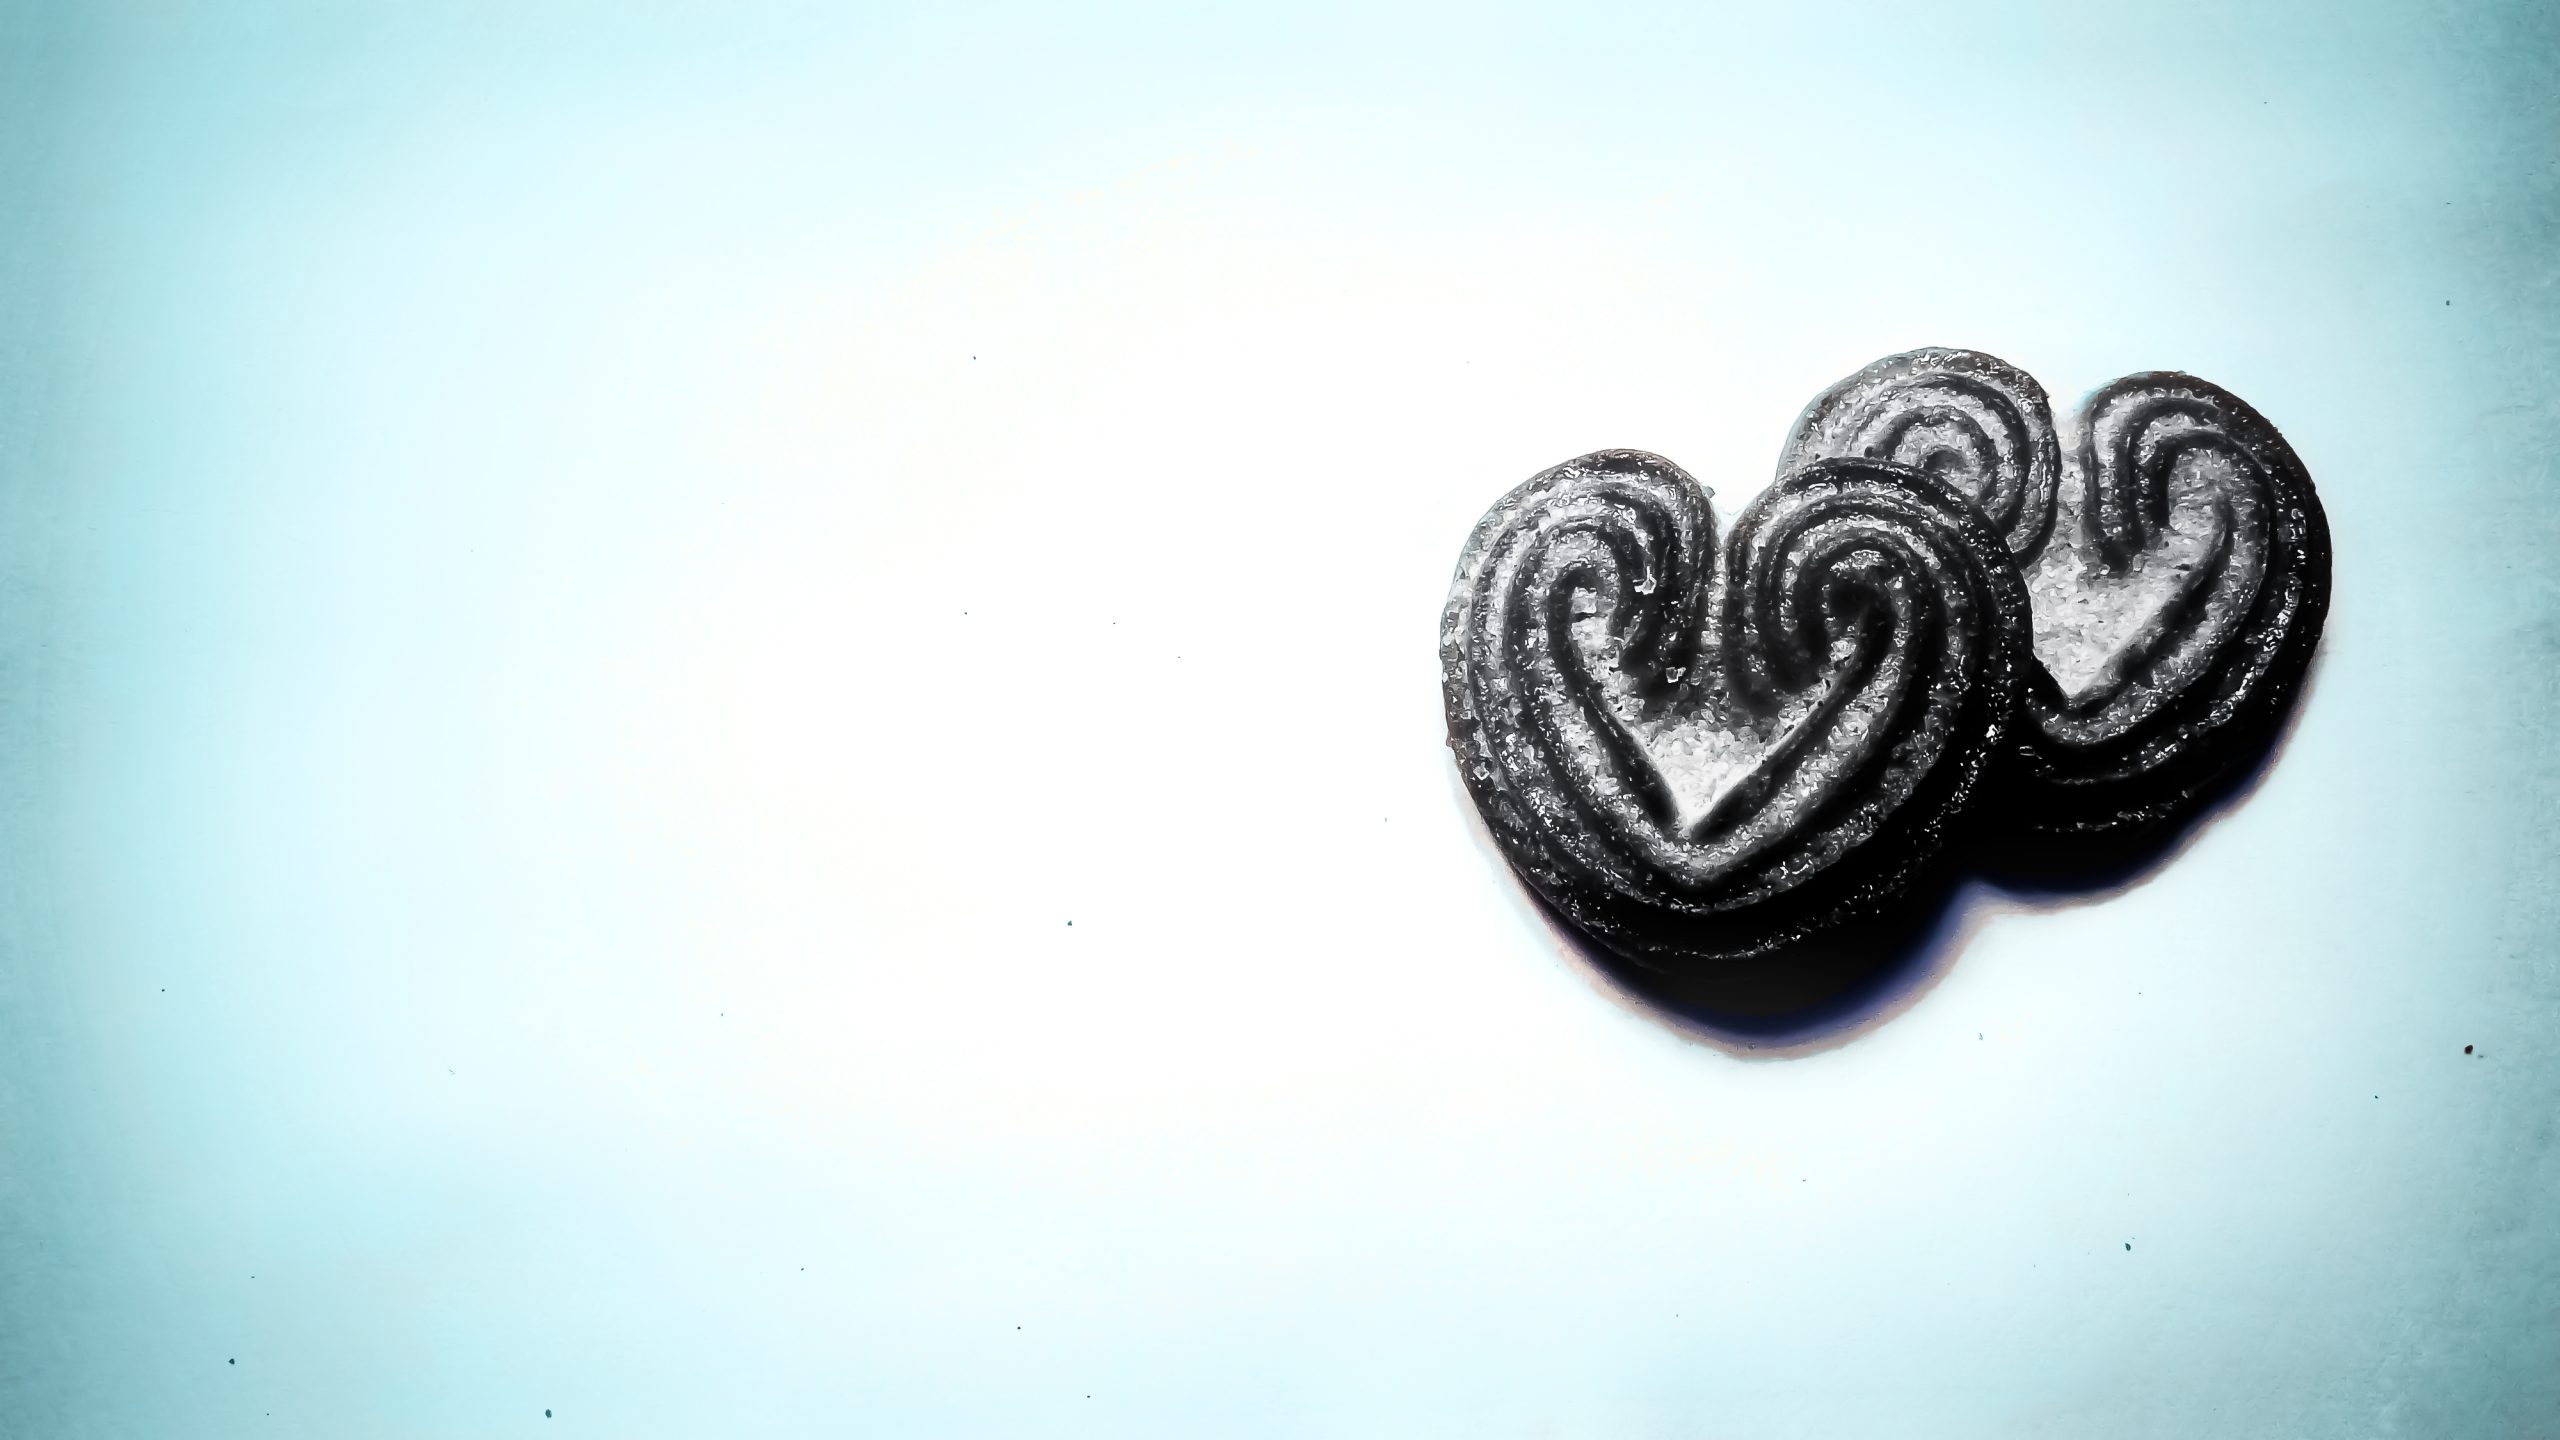 Little Heart shaped cookies